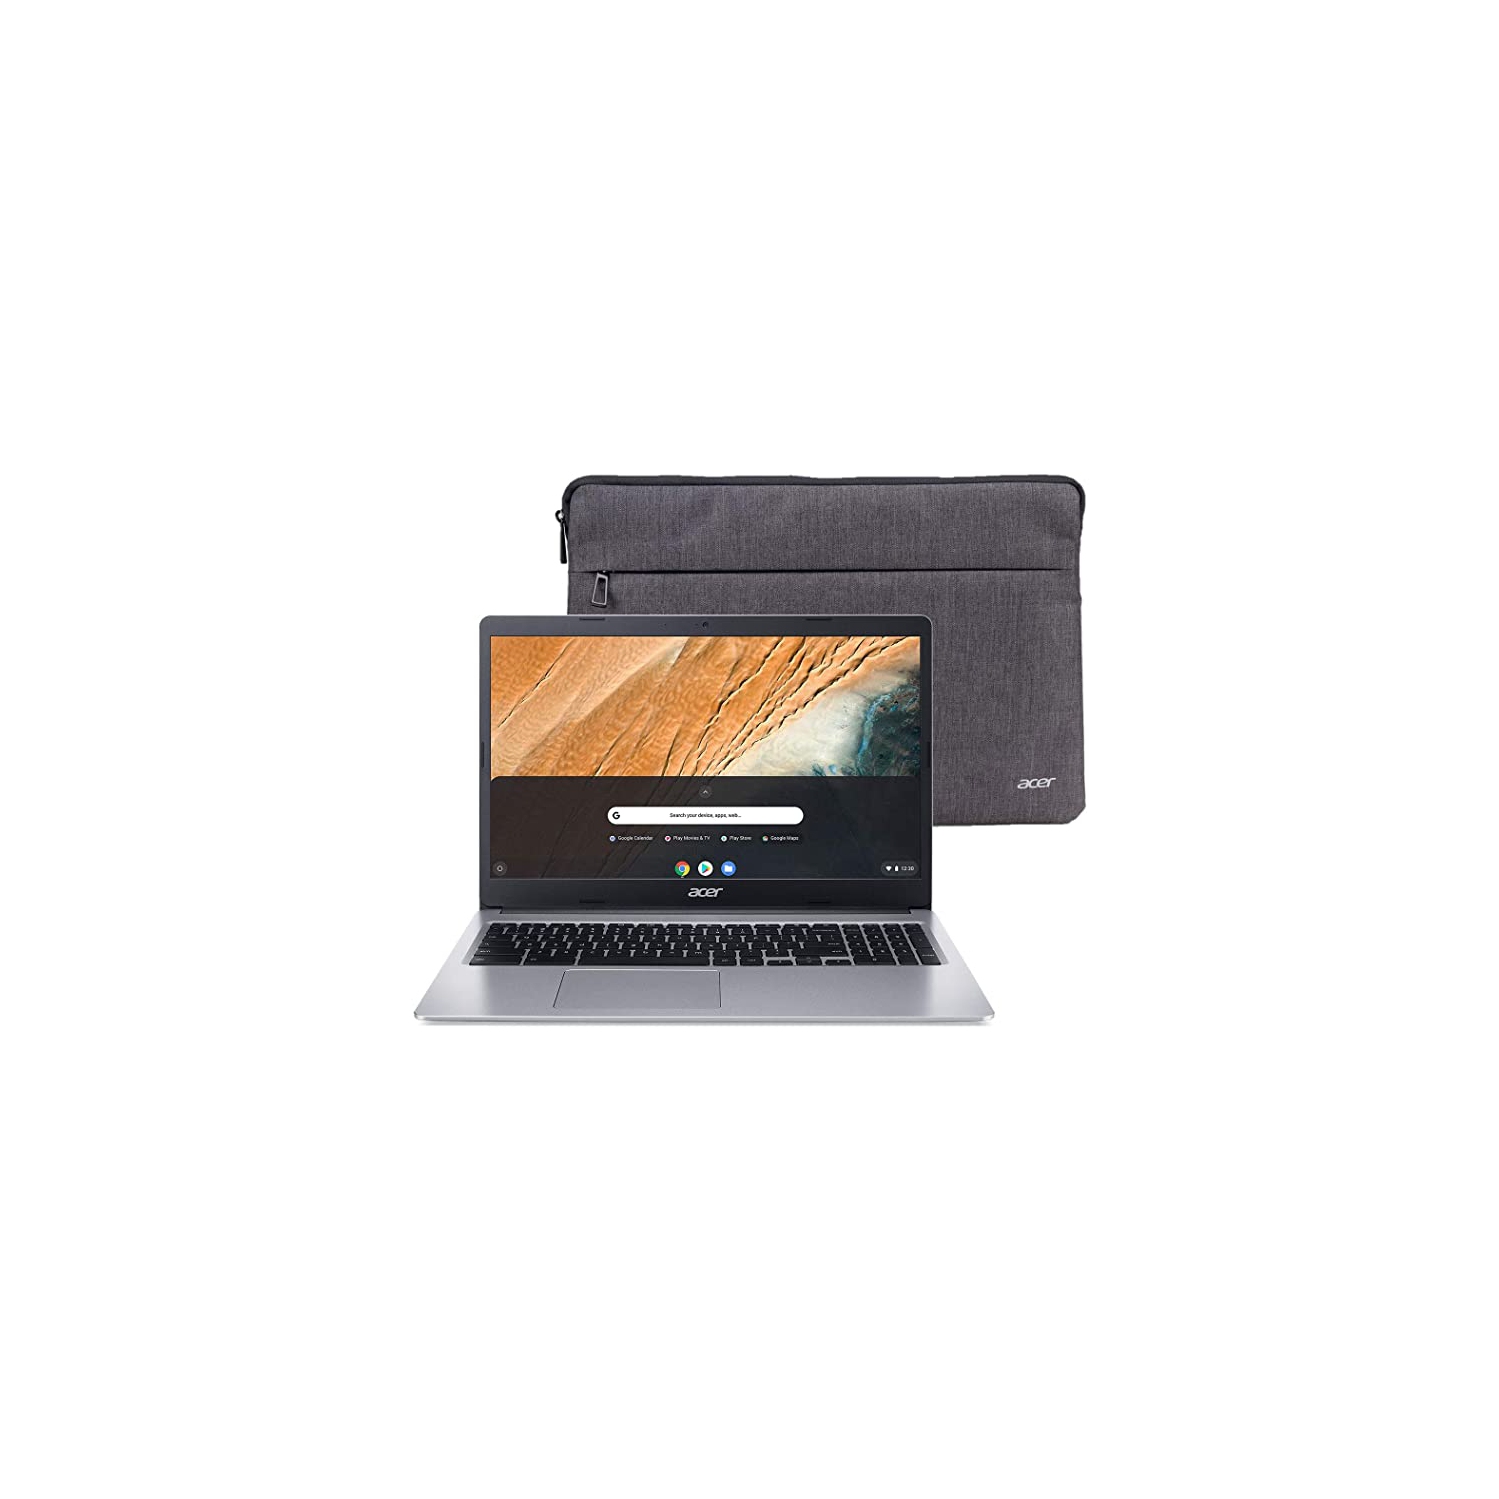 Acer Chromebook 15.6" - Intel Celeron N4000 1.1Ghz Processor, 4GB RAM, 32GB Storage - Google Classroom Ready + Bonus Protective Sleeve